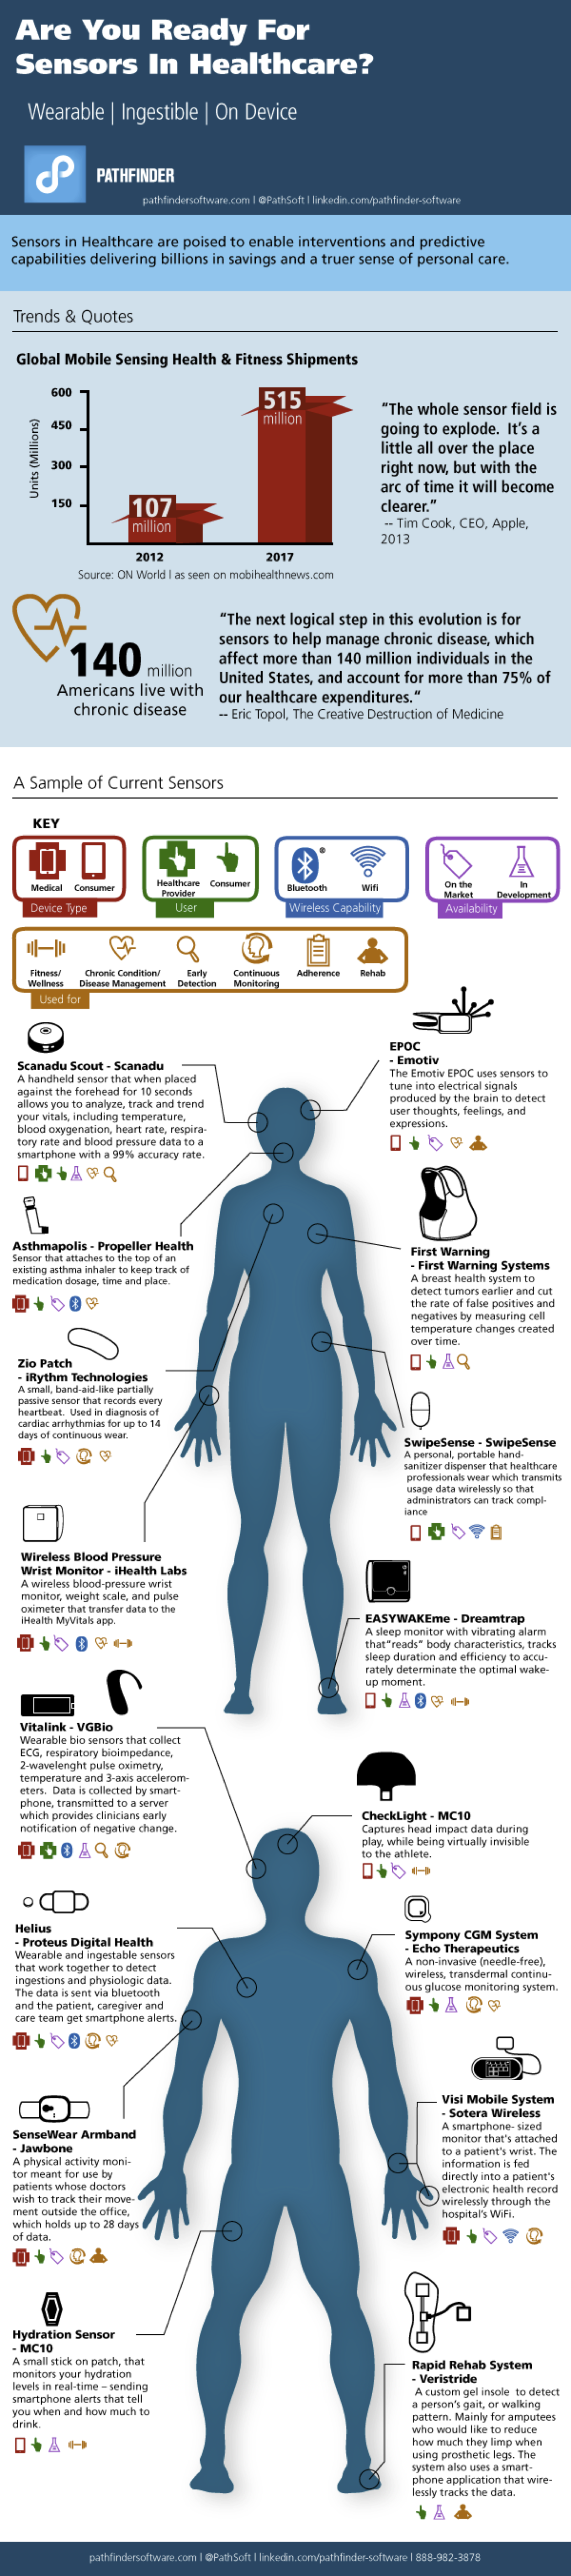 Sensors Infographic